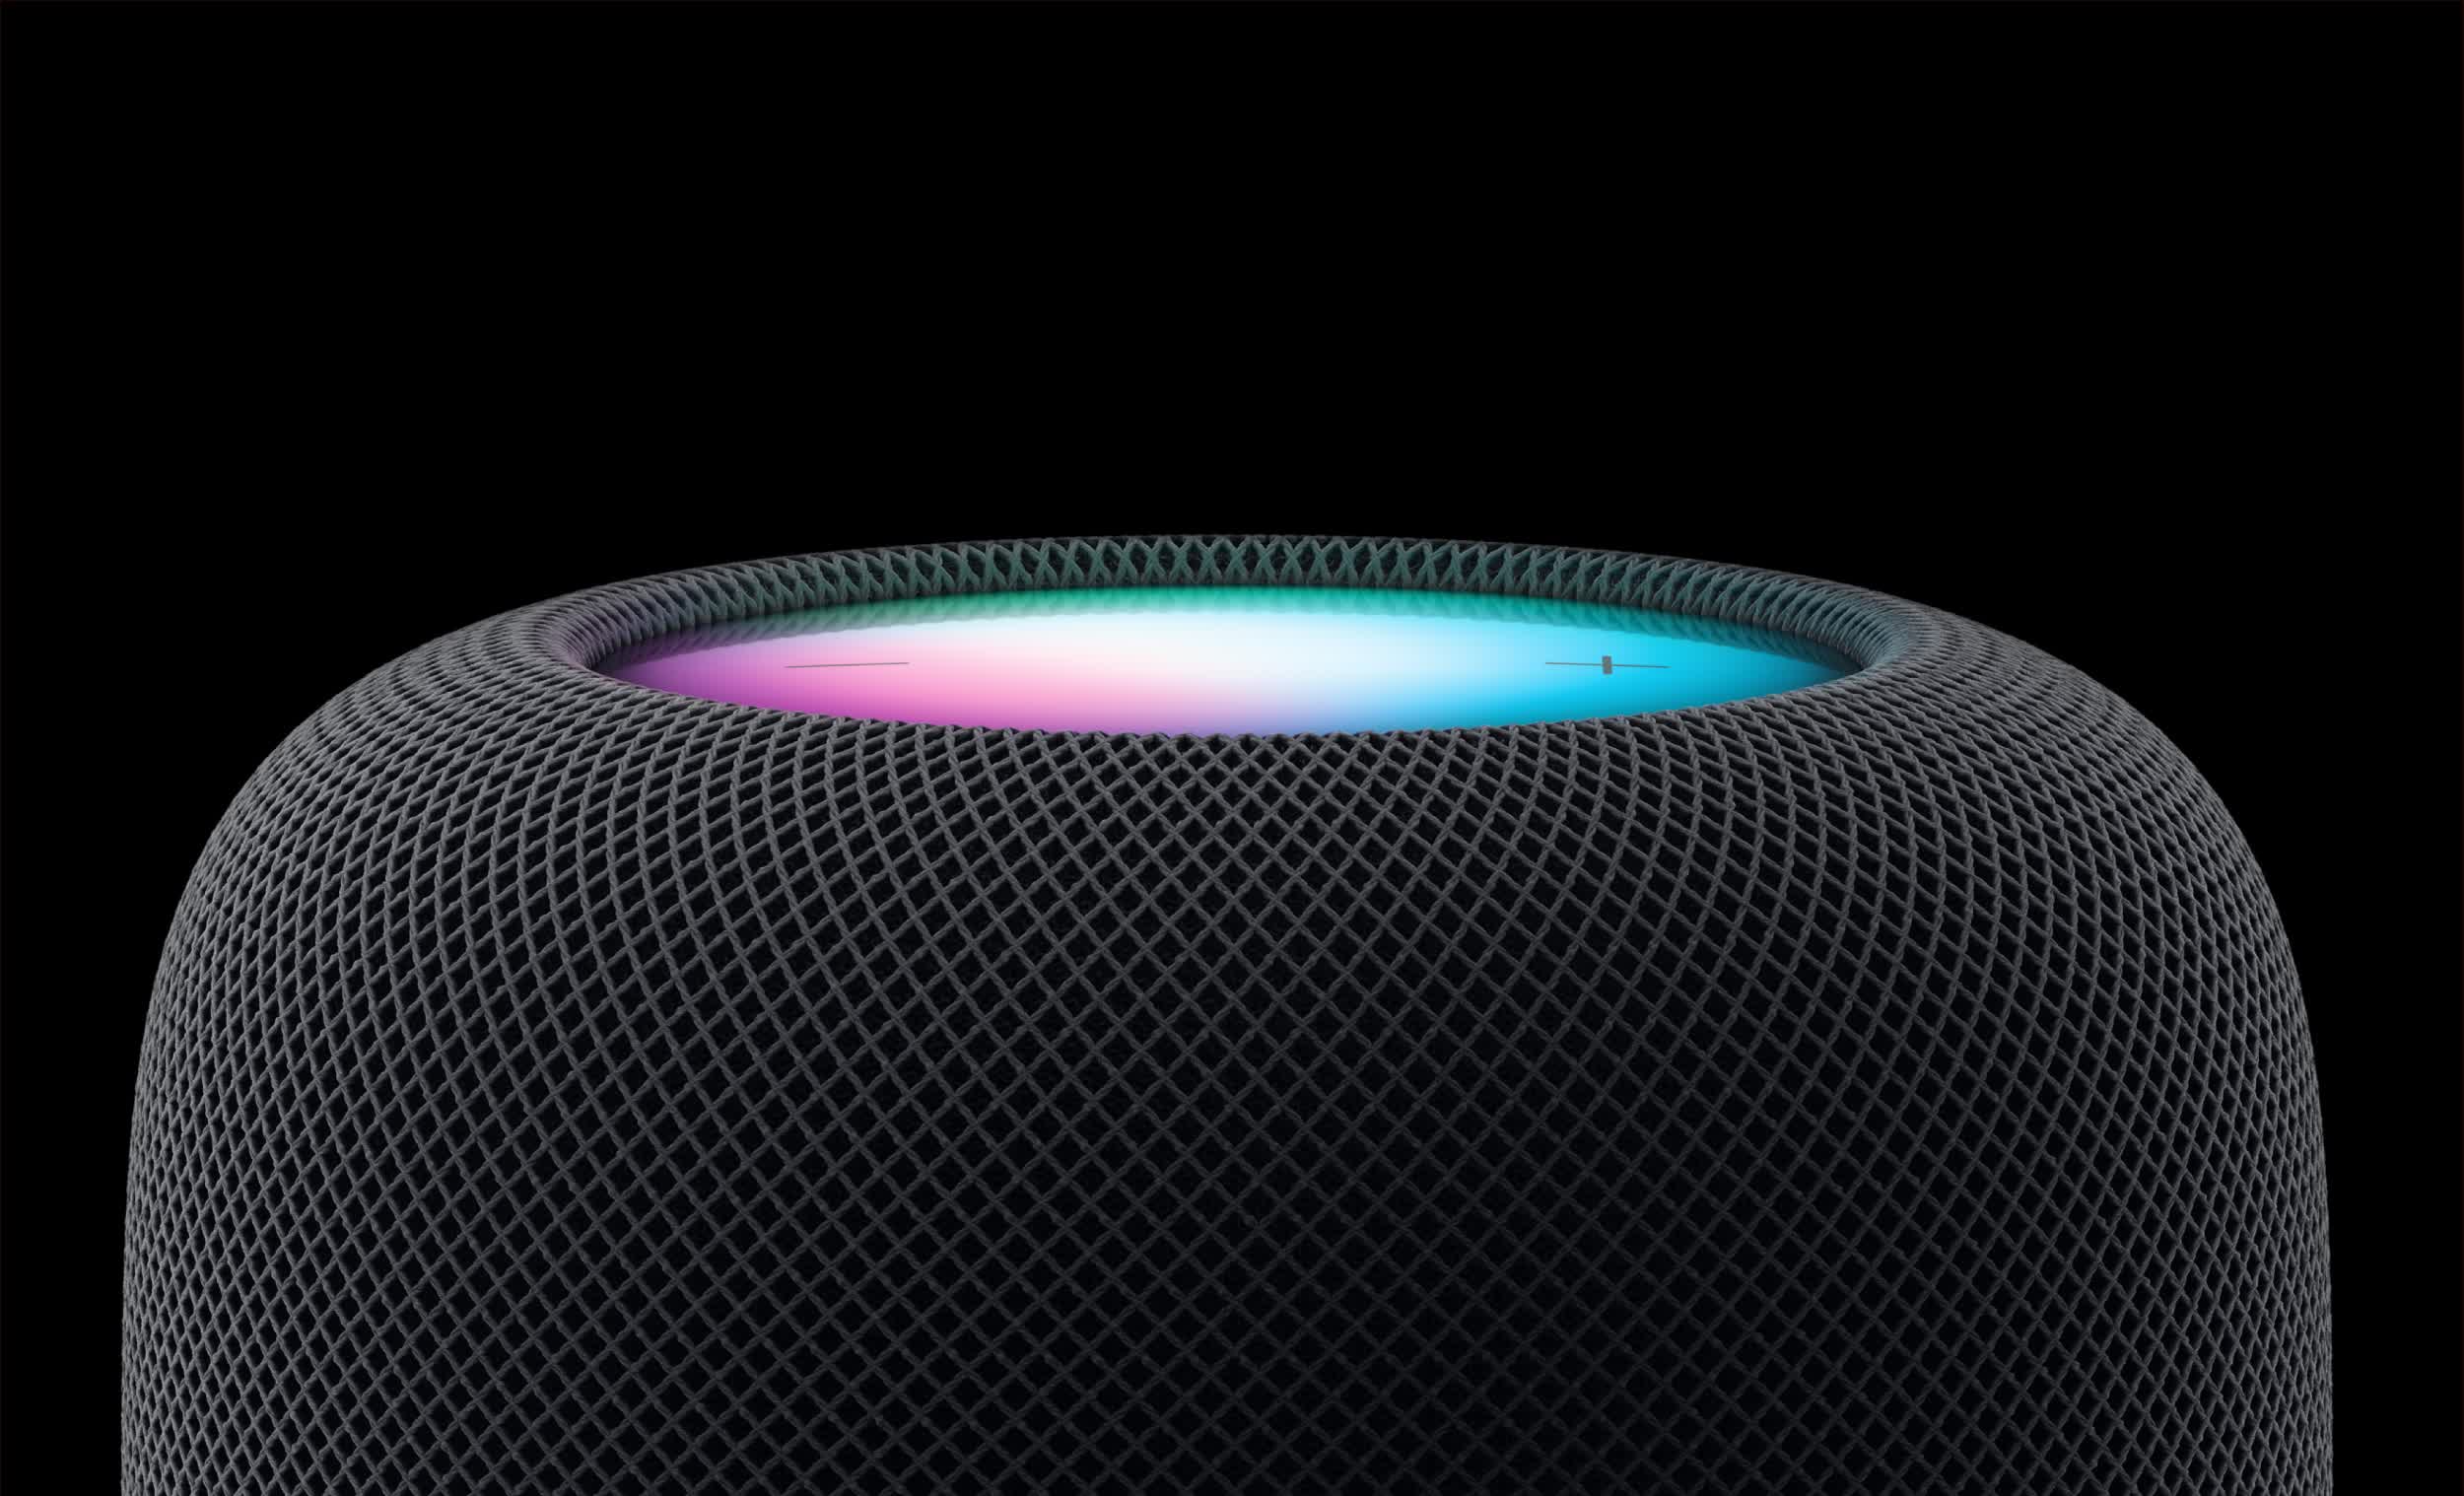 Apple's full-size HomePod smart speaker returns with updated internals